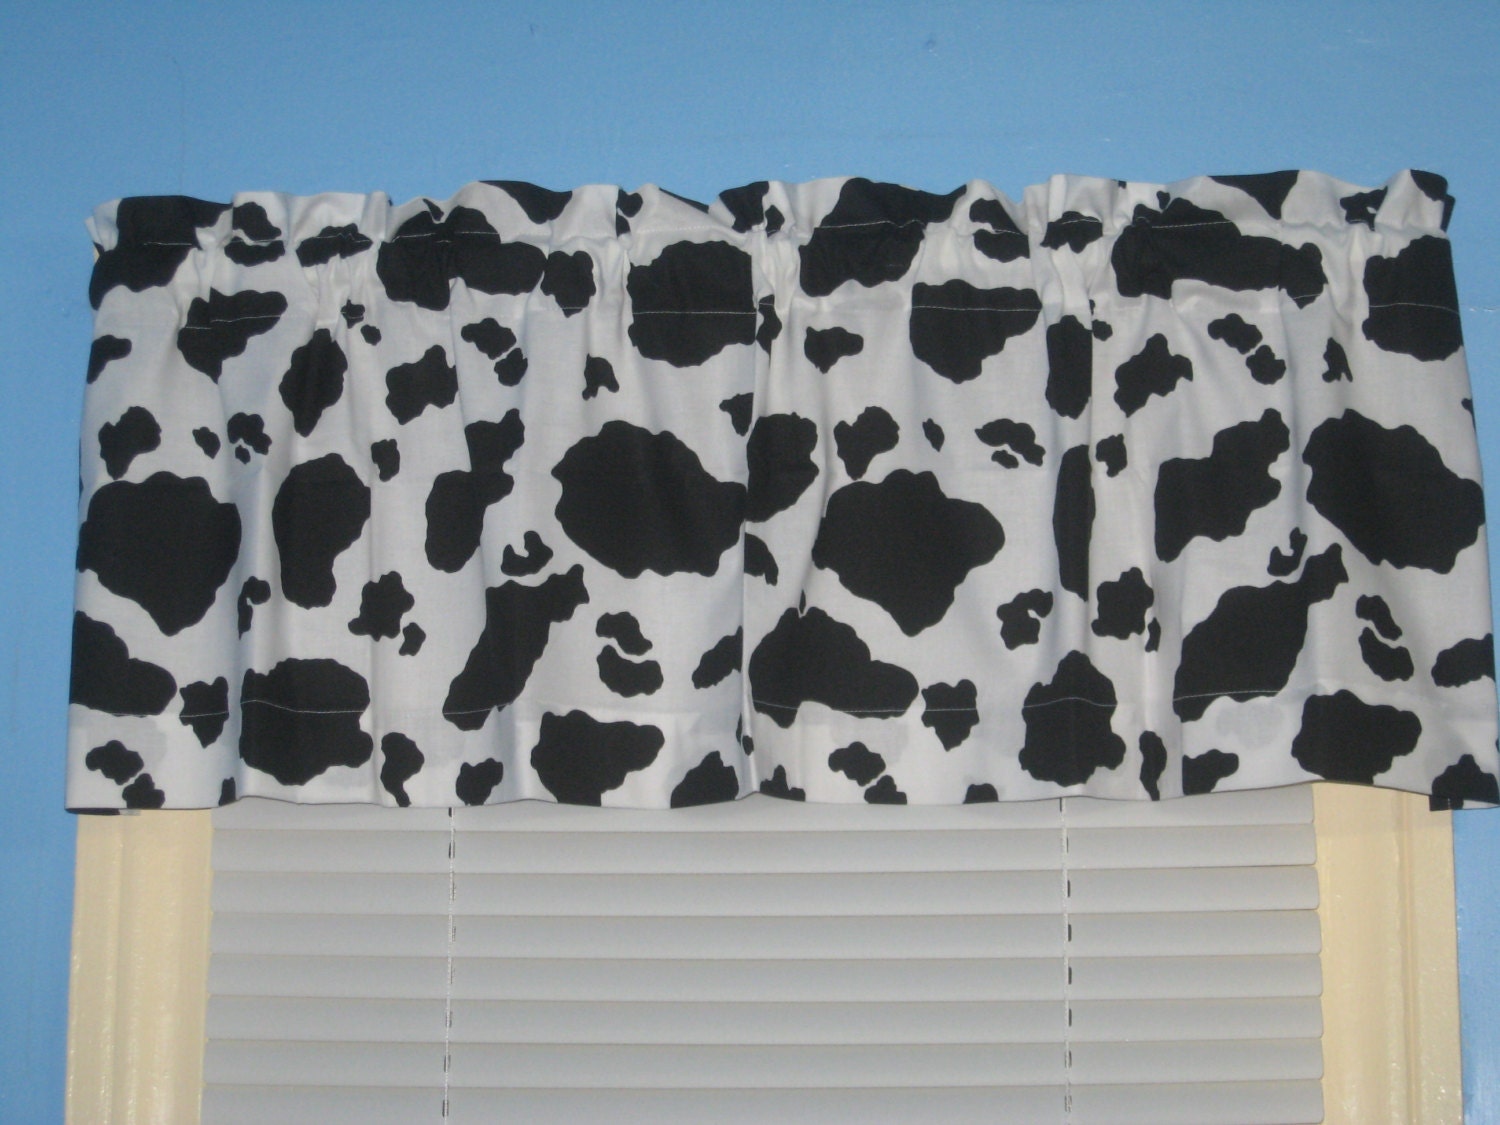 43"W 15"L  Black White Cow Spots Window Curtain Valance Cotton fabric 